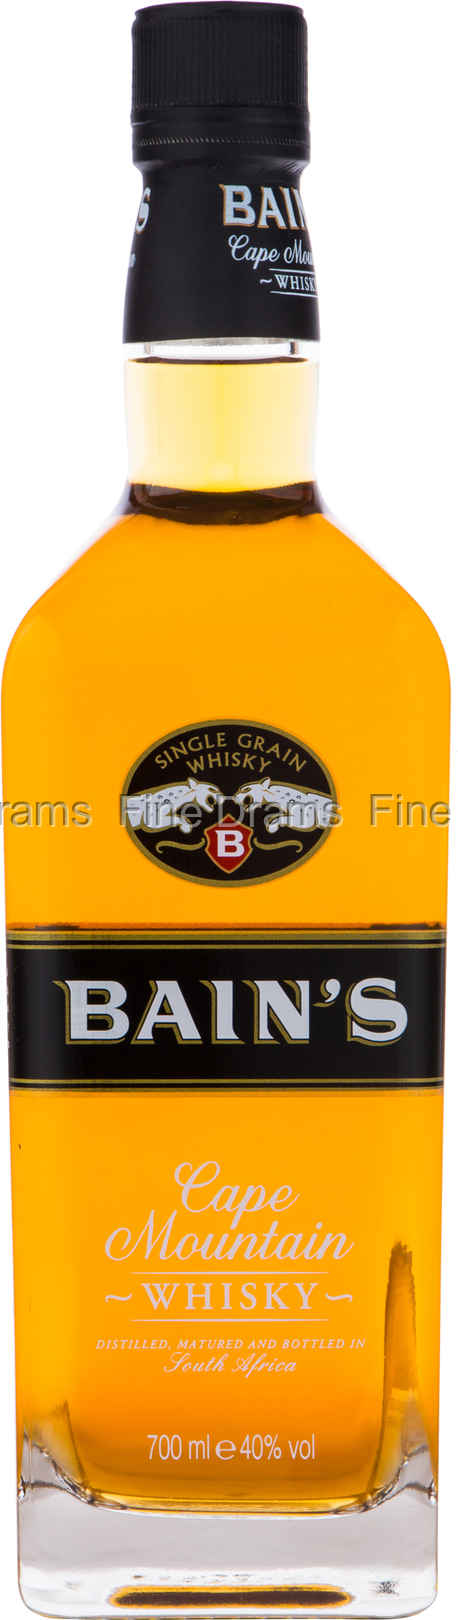 Mountain Bain\'s Whisky Cape